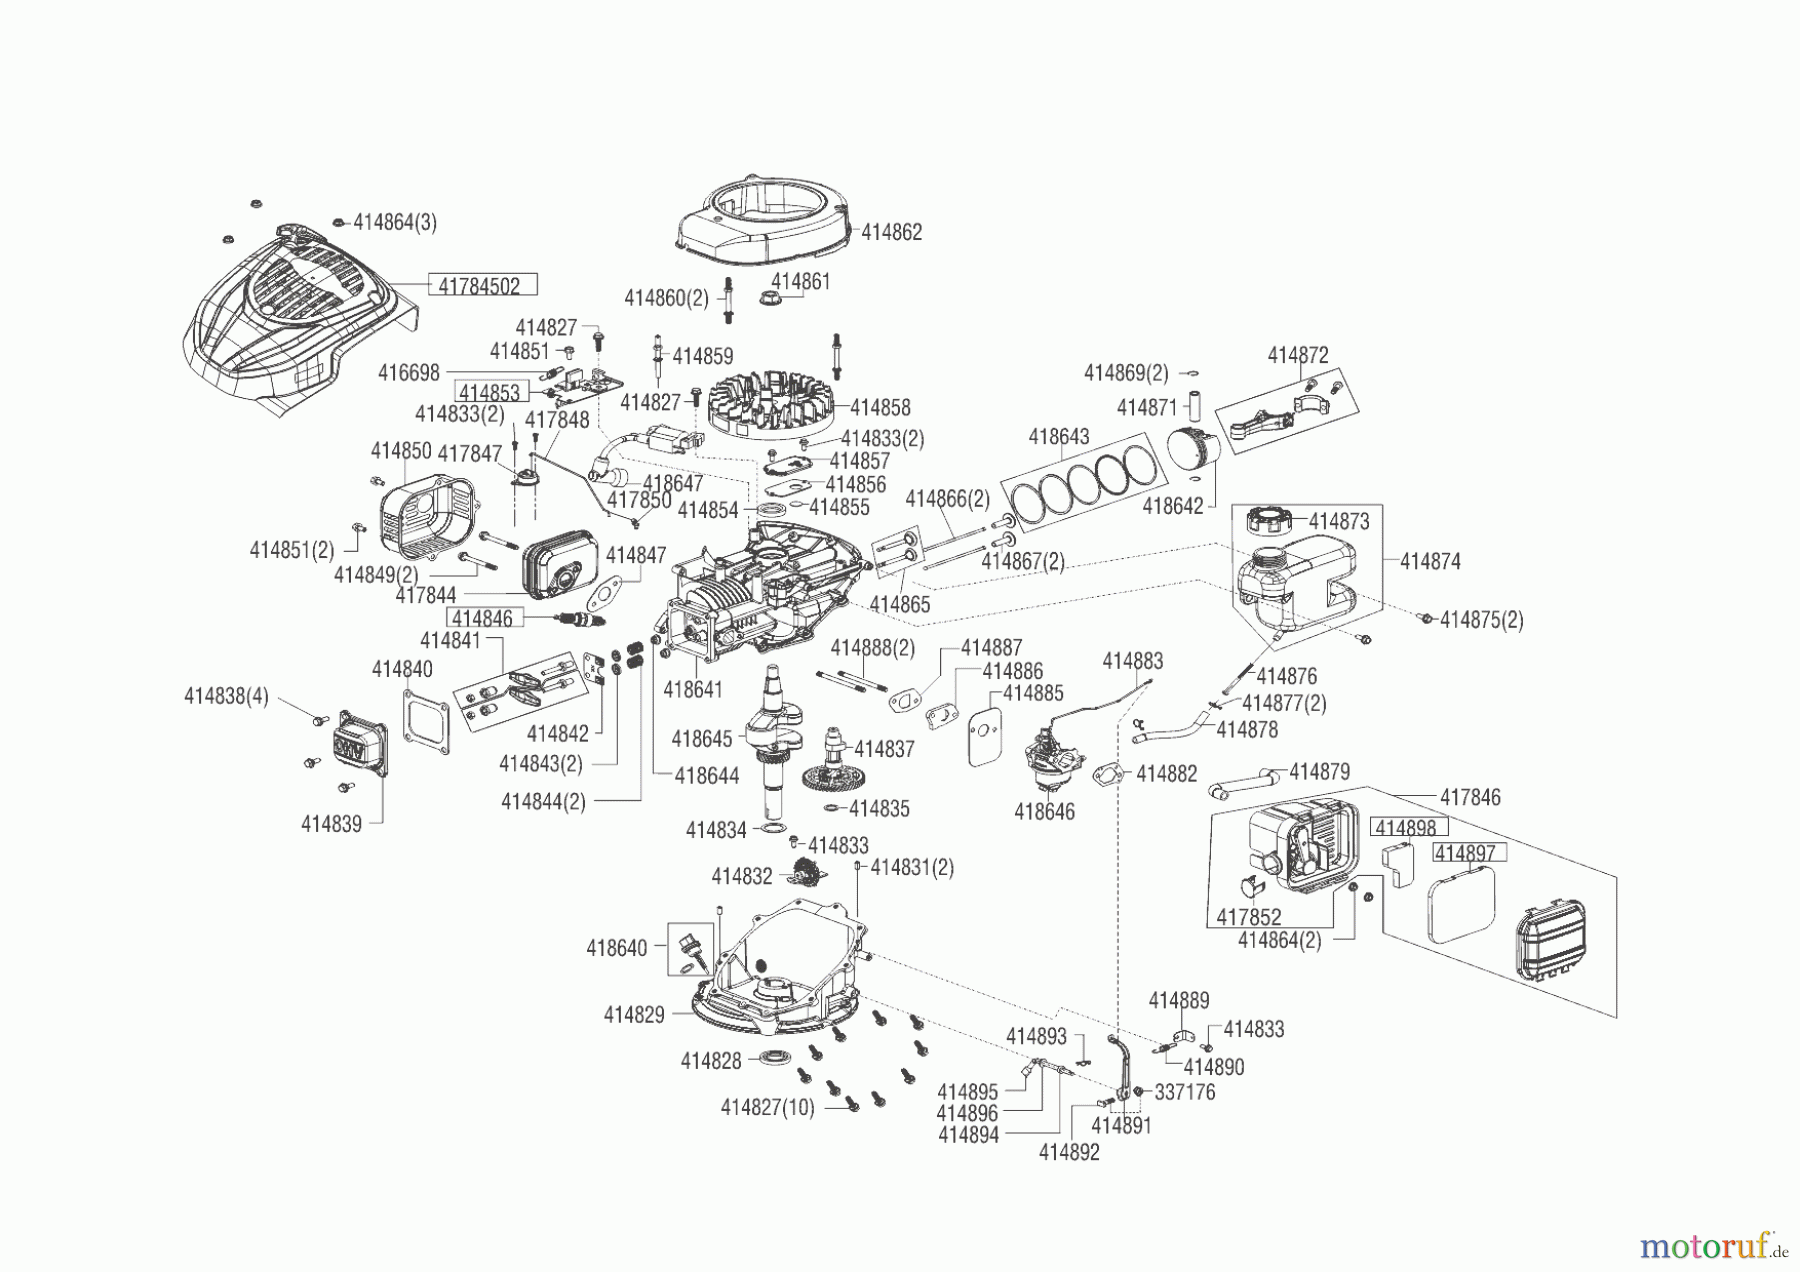  AL-KO Gartentechnik Benzinmotoren B-MOTOR PRO 145 QSS LC1P65FE R3  01/2019 Seite 1